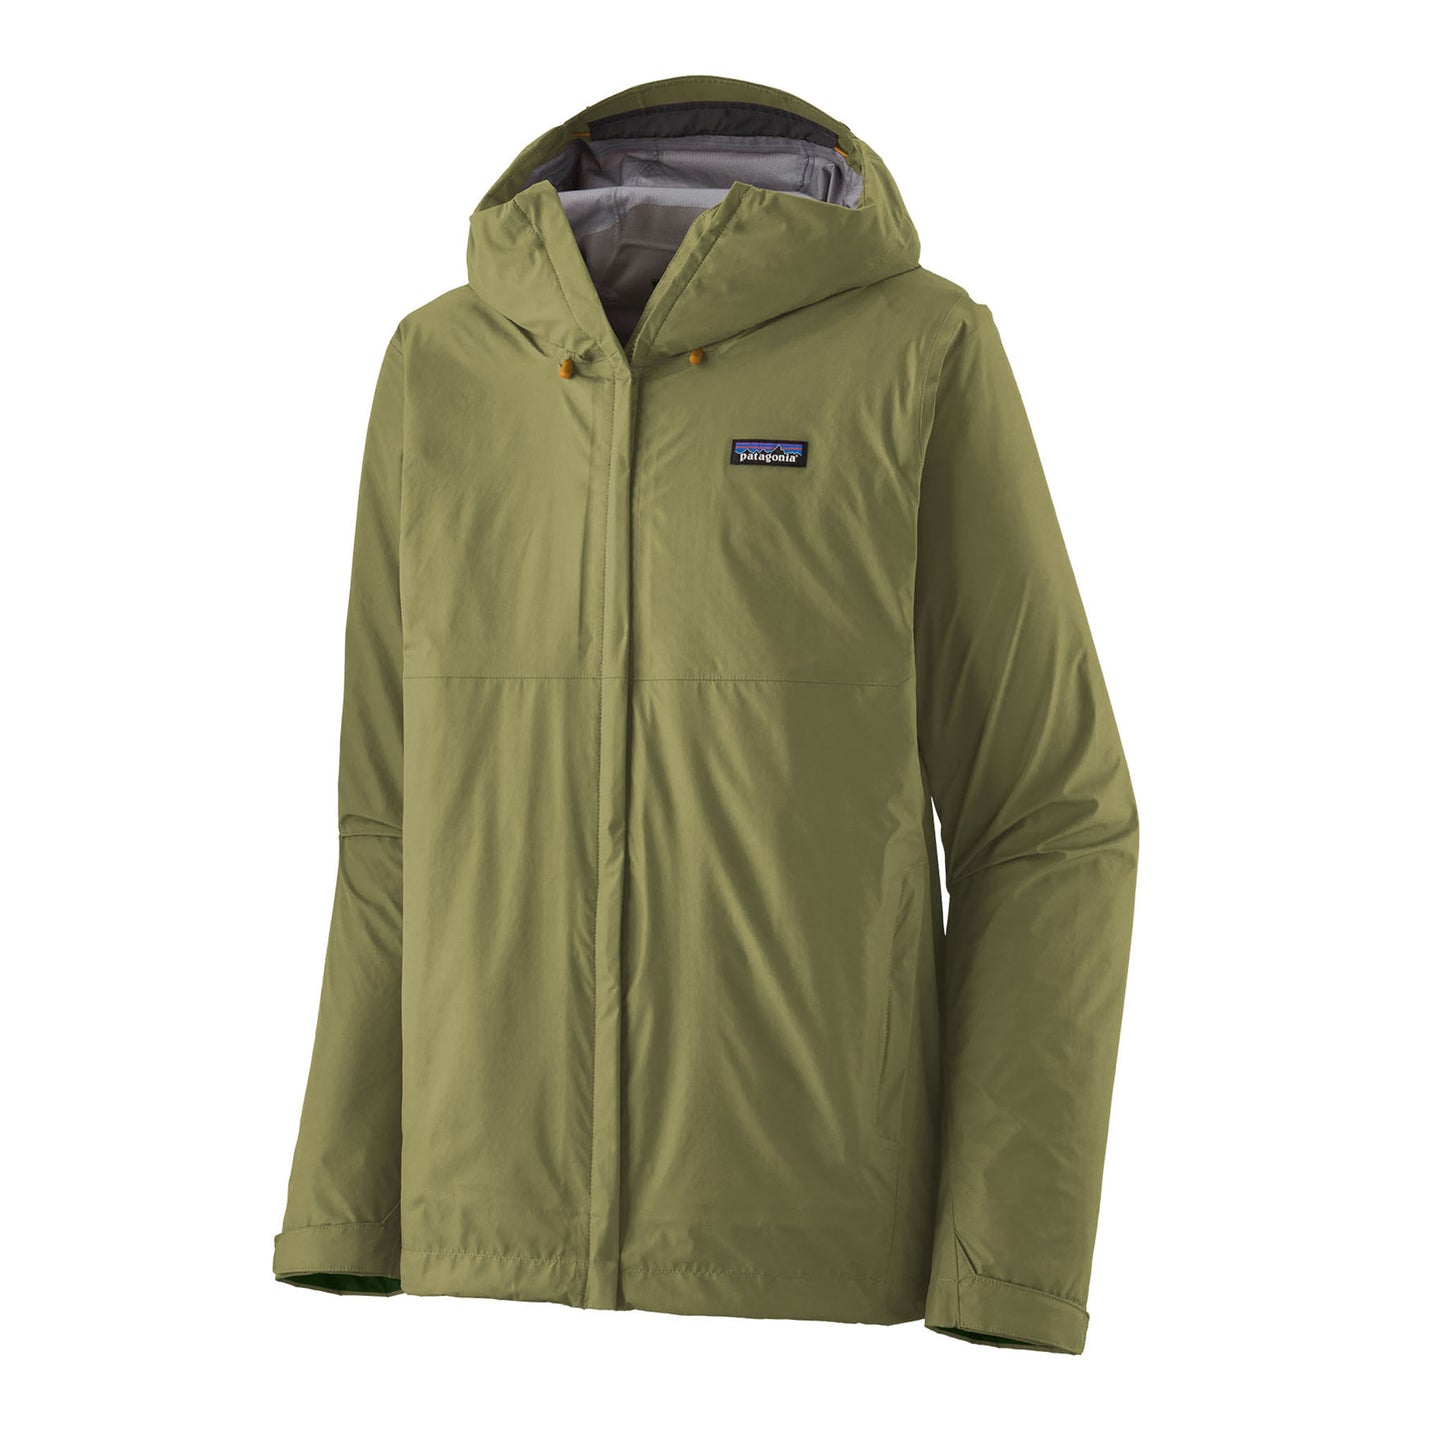 Men's Patagonia Torrentshell 3L jacket in green